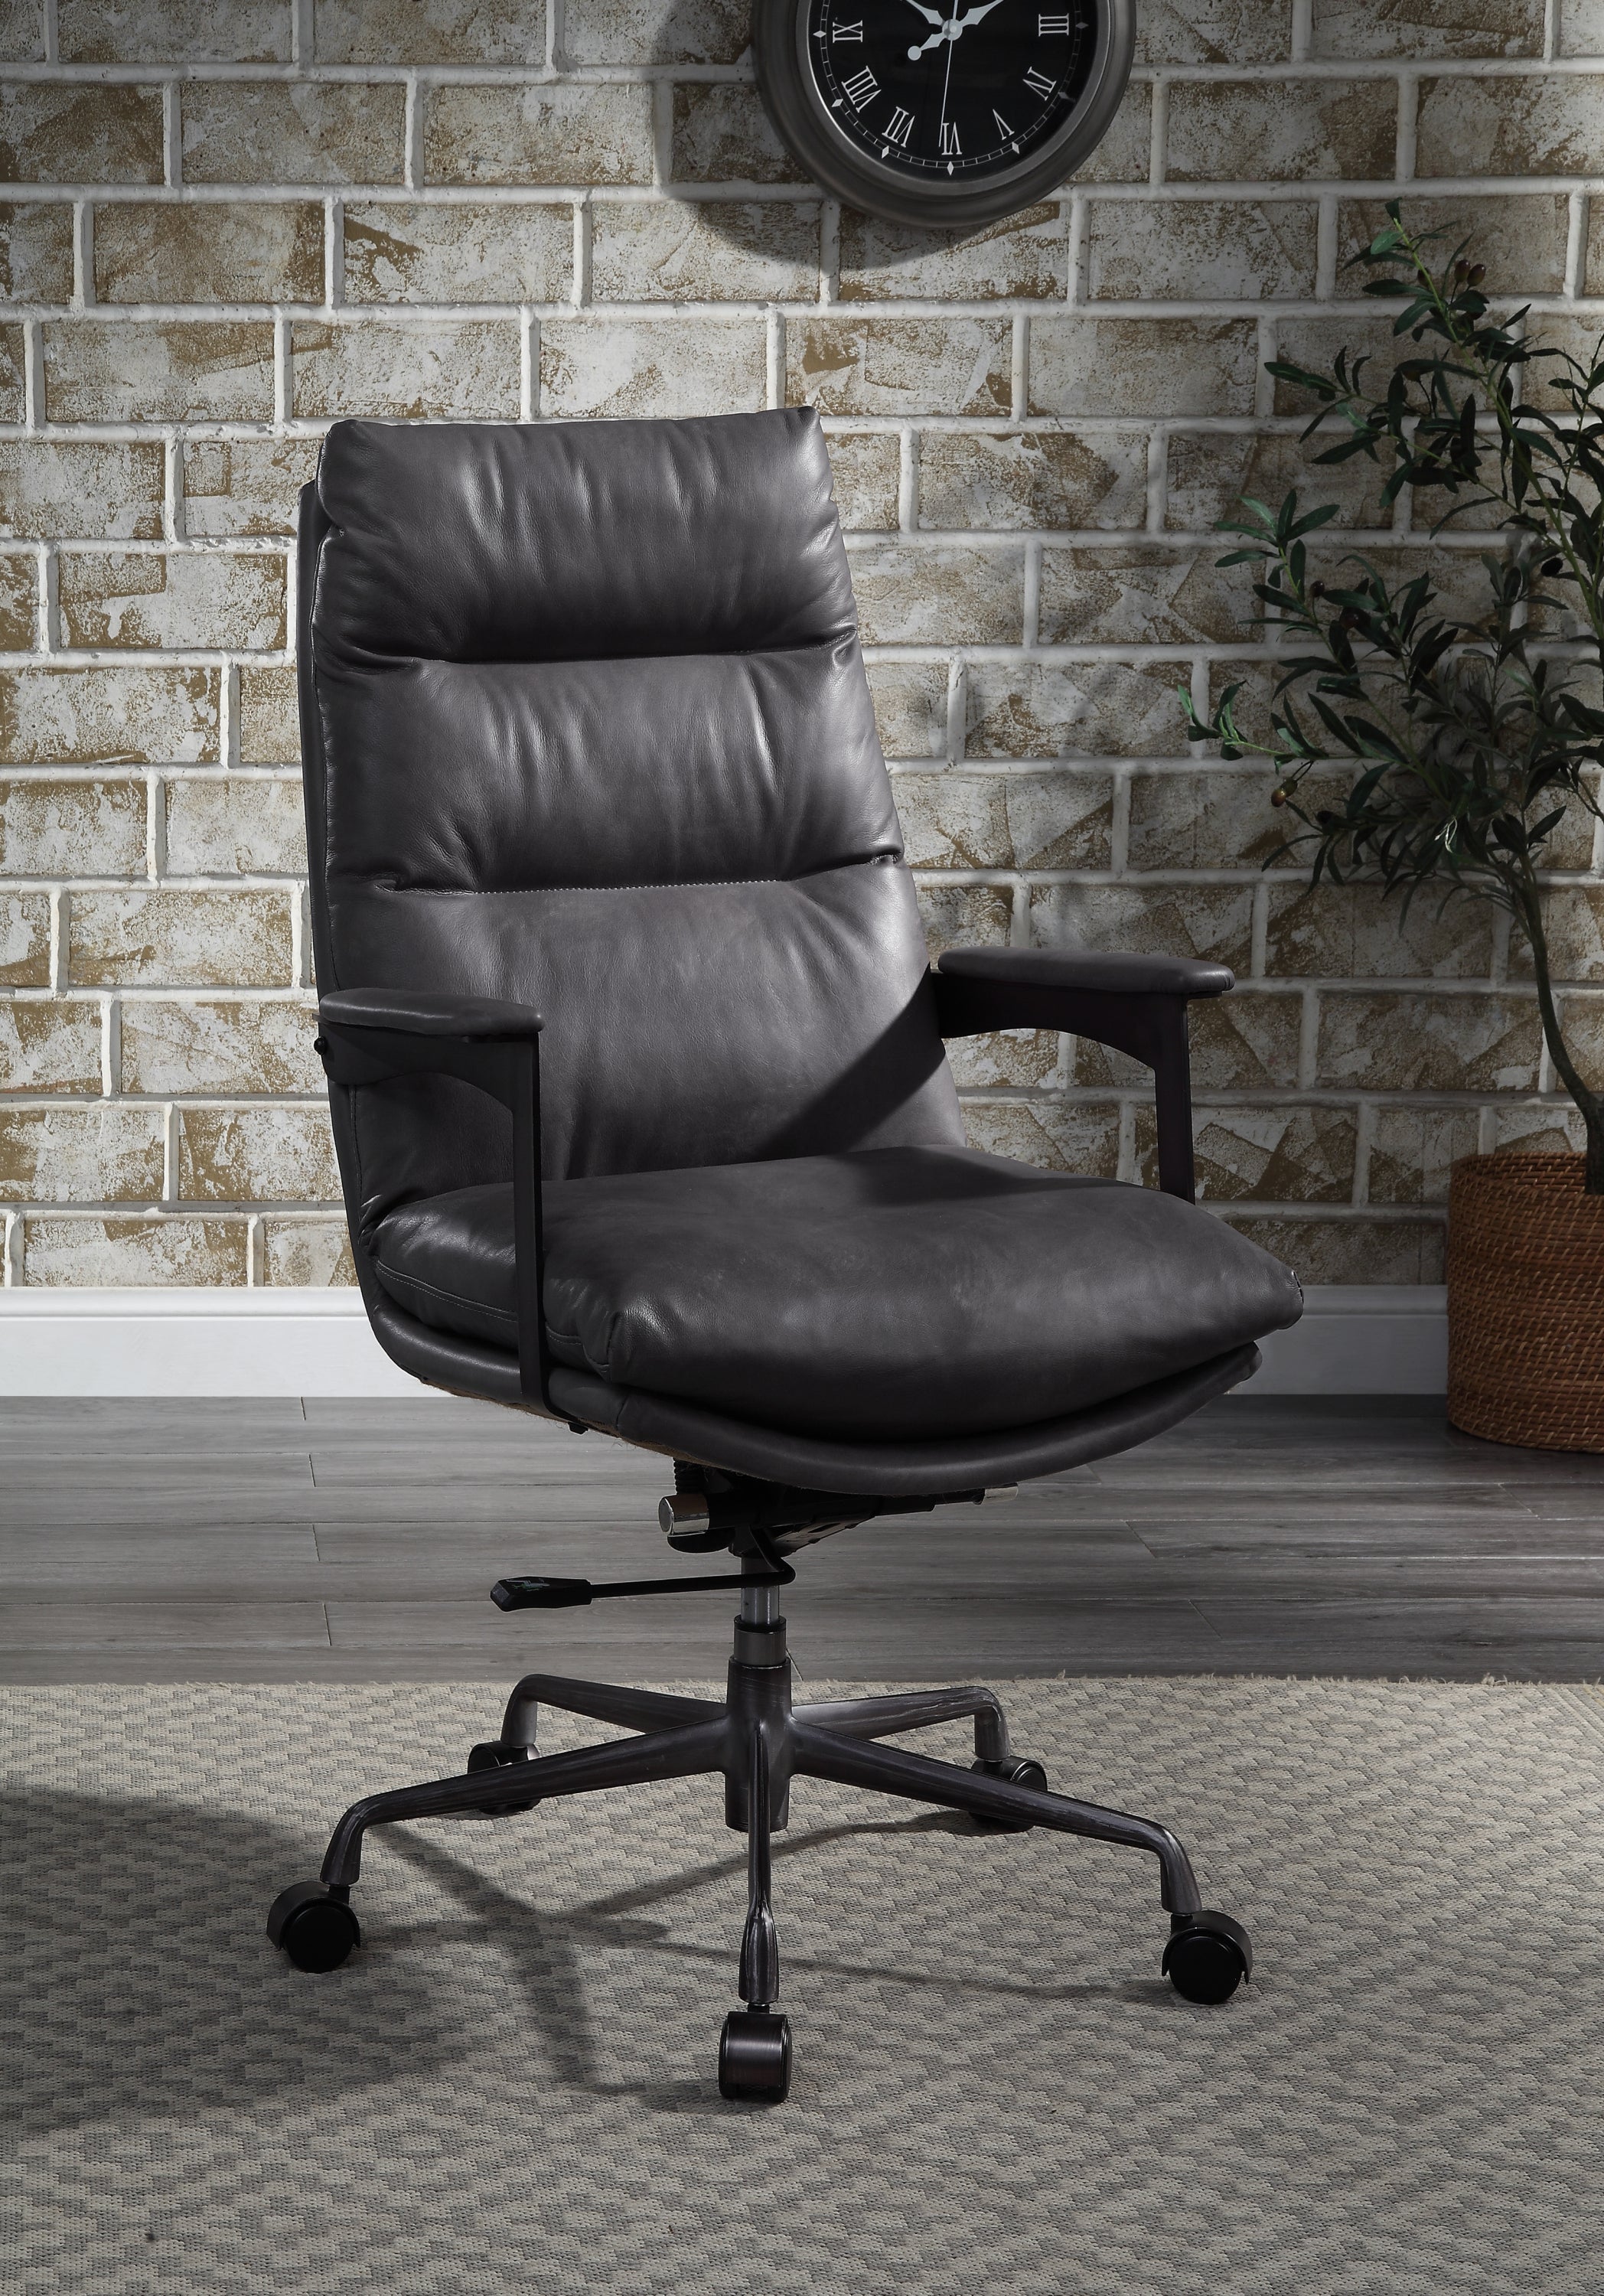 ACME Crursa Leather Office Chair (Gray)